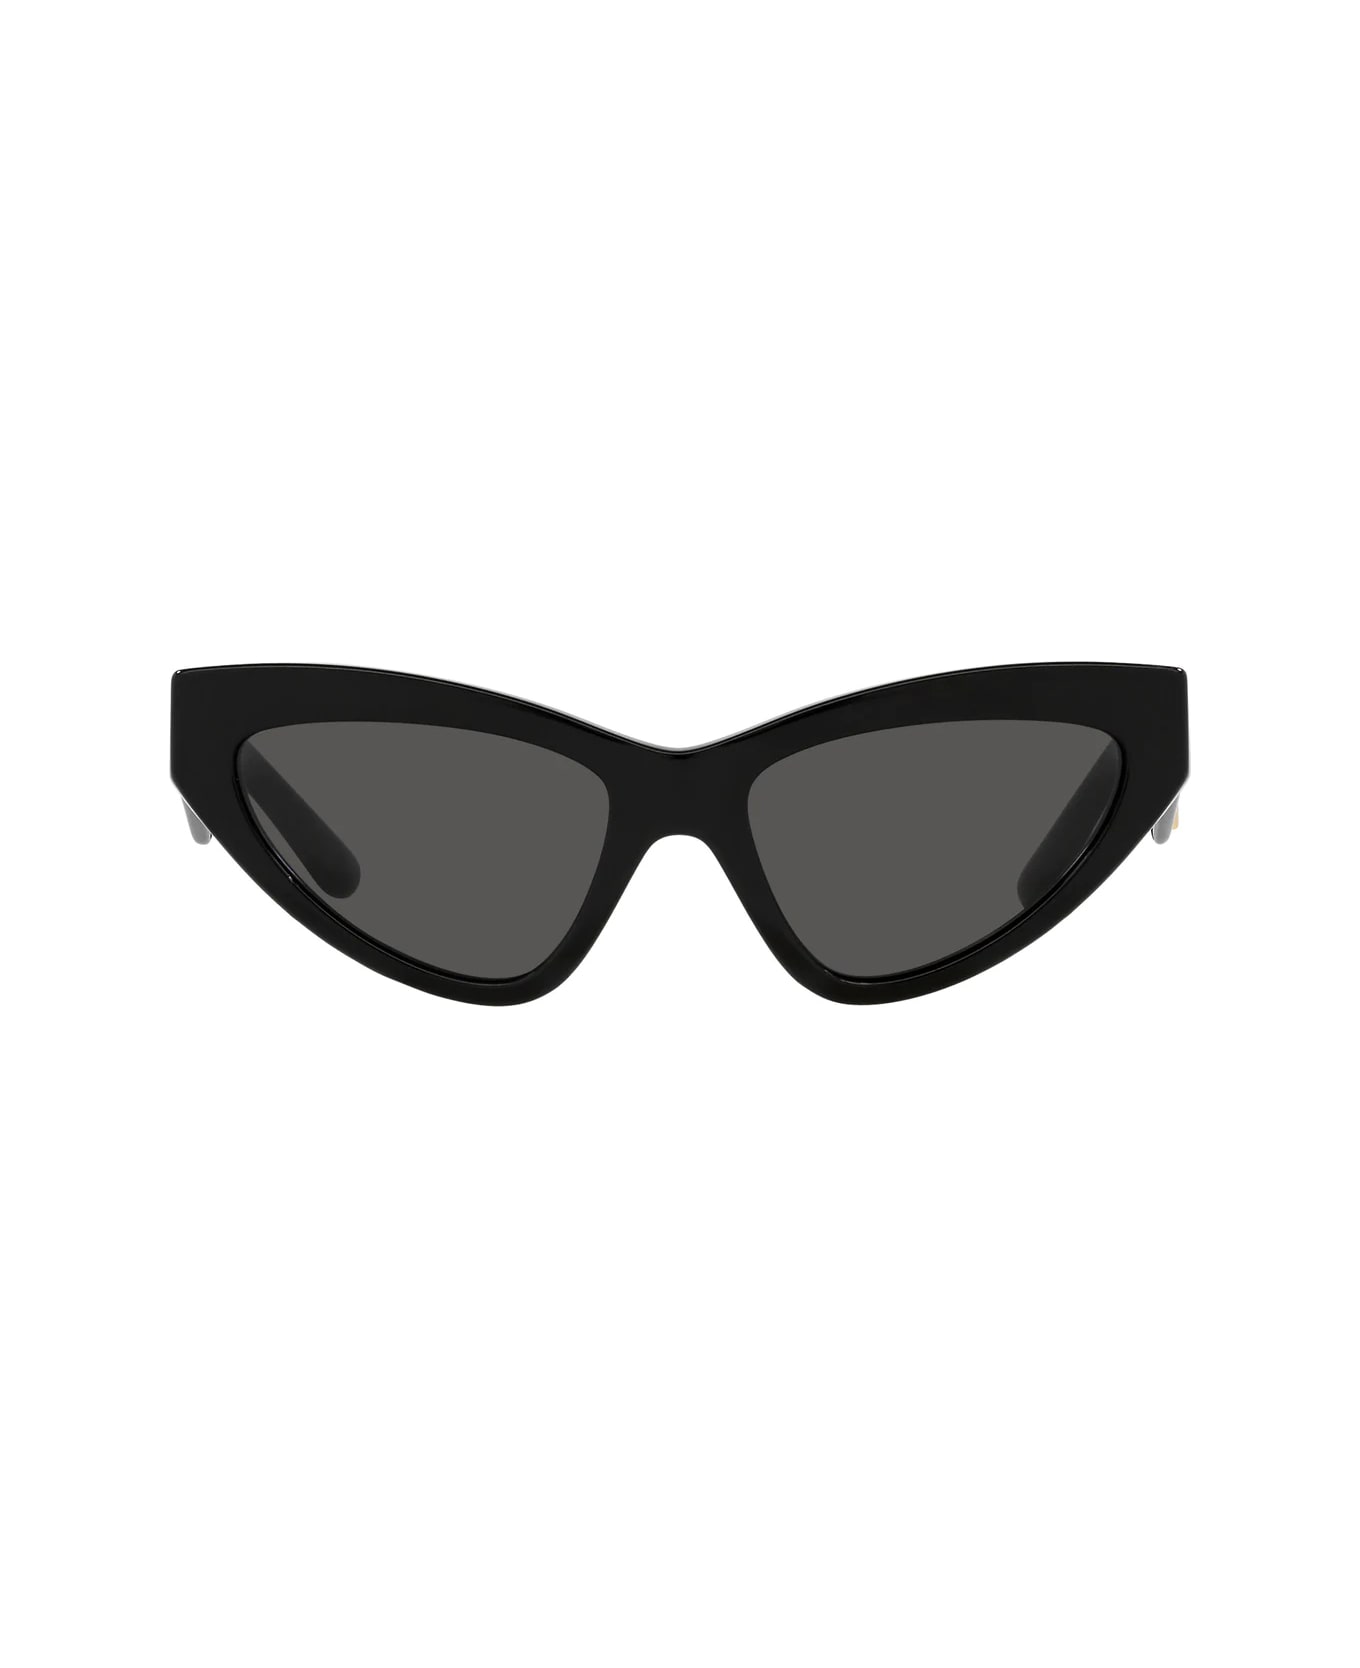 Dolce & Gabbana Eyewear Dg4439 501/87 Sunglasses - Nero